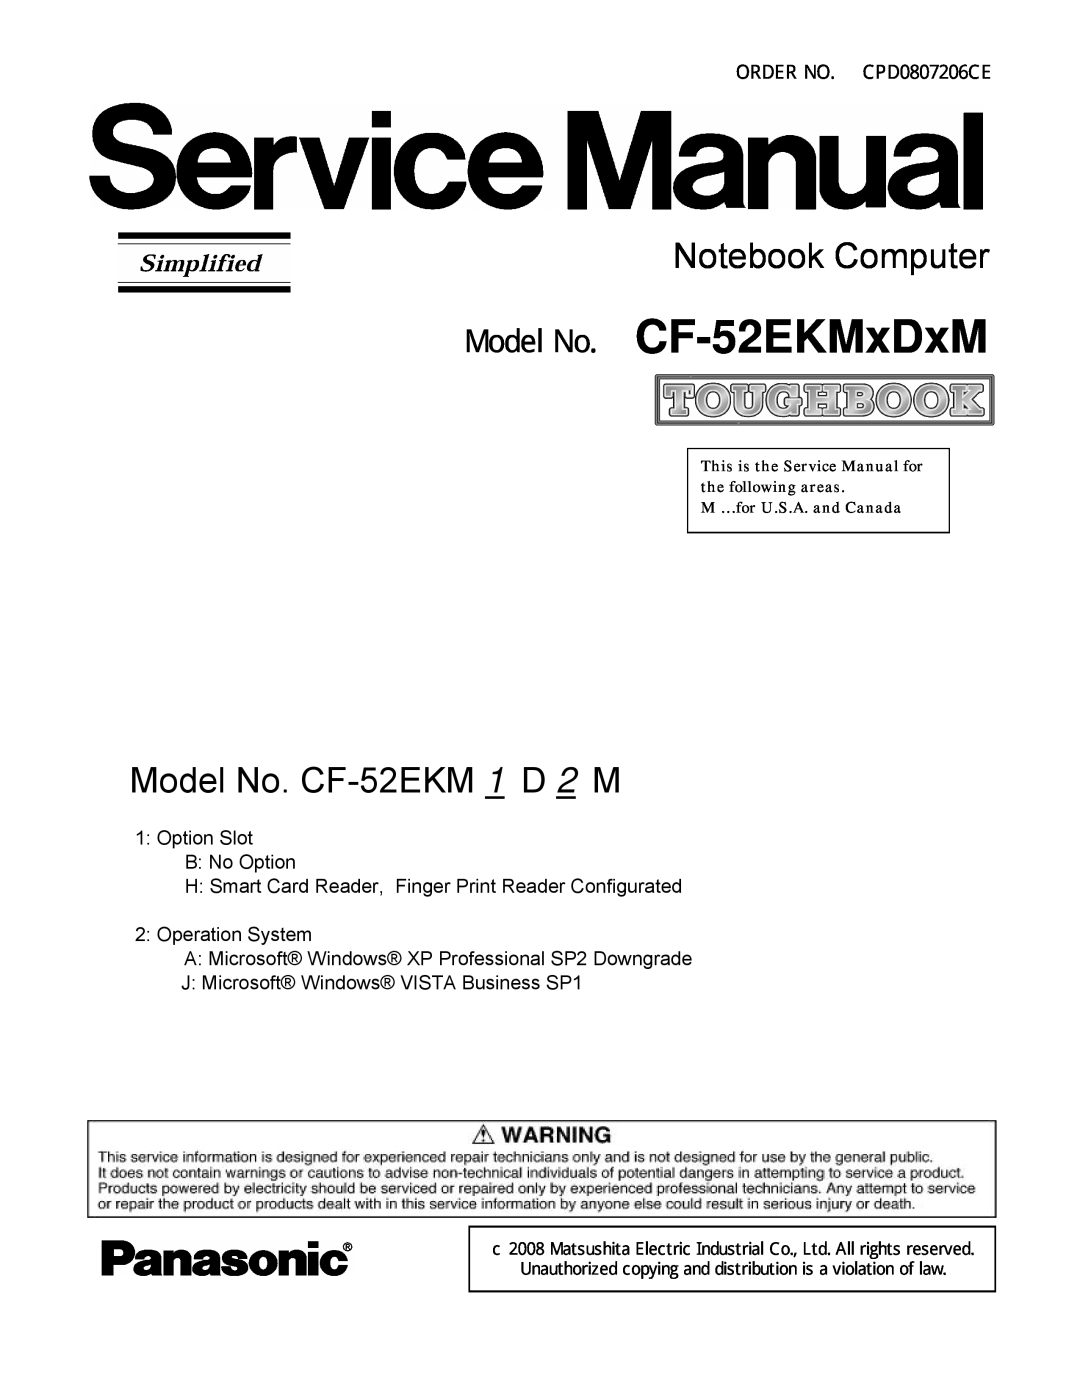 Panasonic service manual Model No. CF-52EKMxDxM, Notebook Computer, Model No. CF-52EKM 1 D 2 M, ORDER NO. CPD0807206CE 